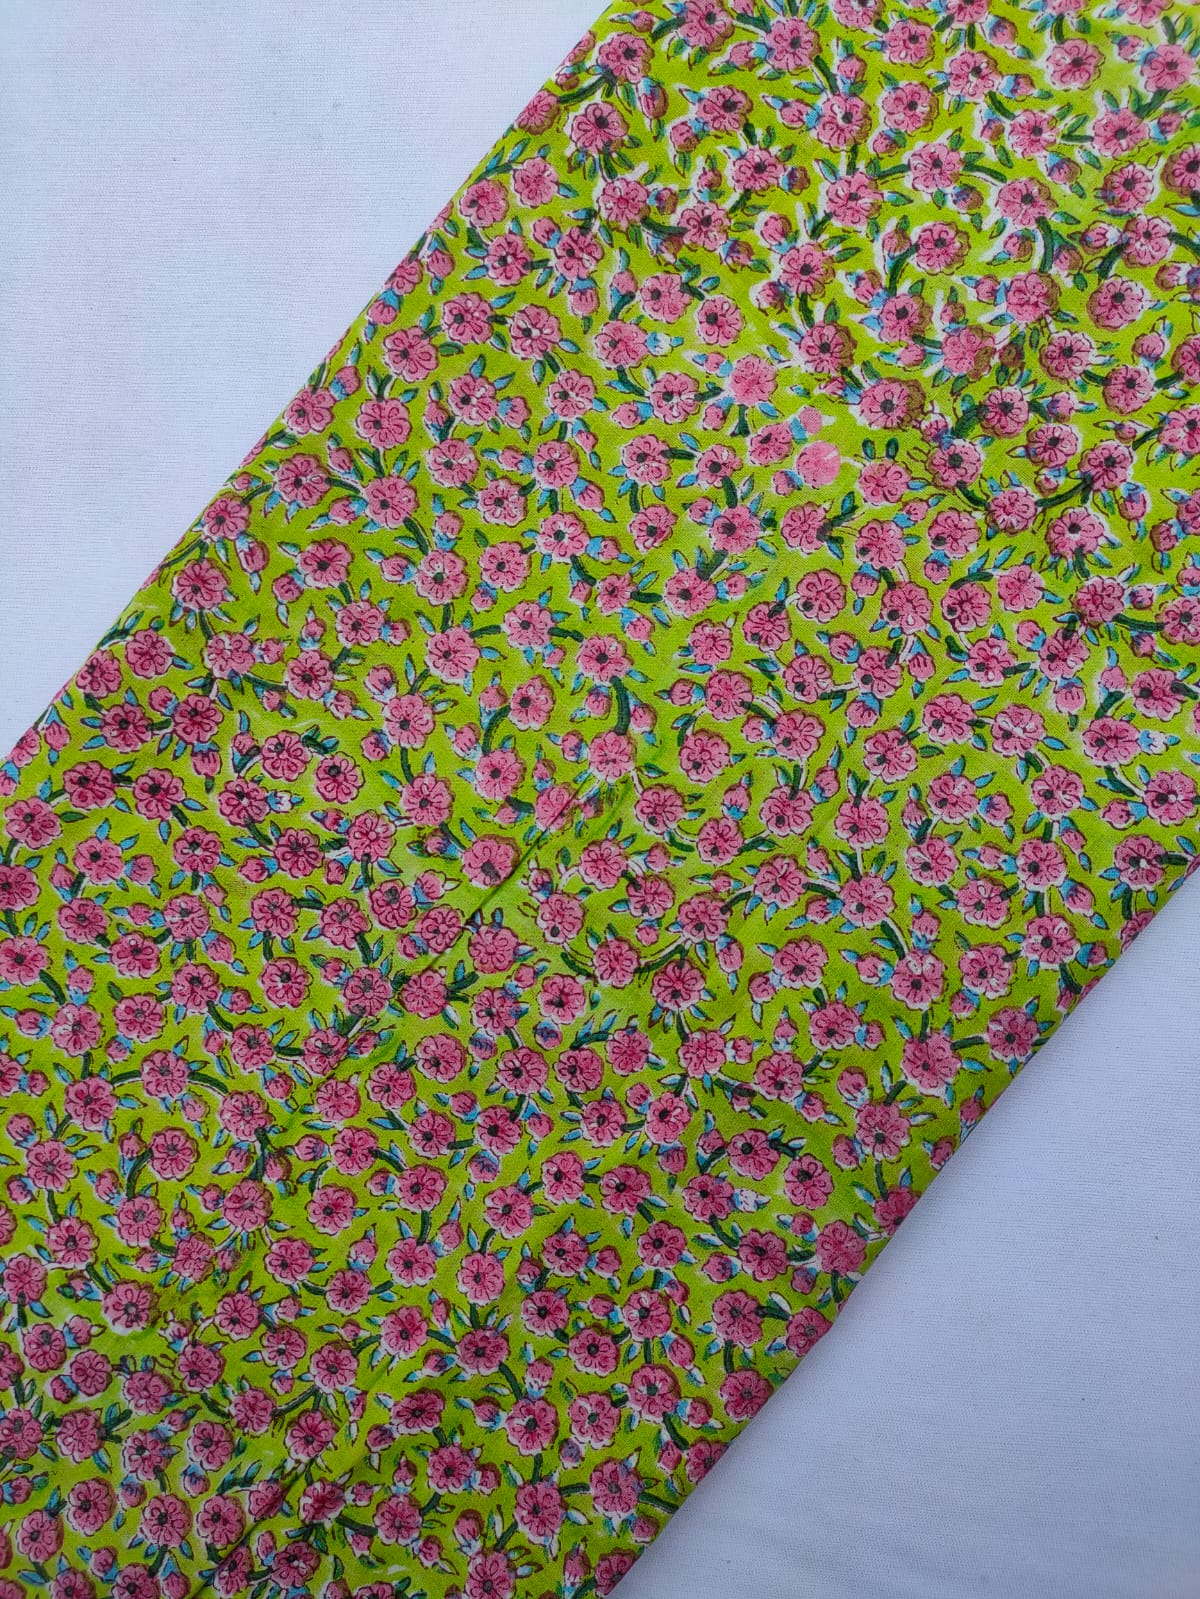 Jaipuri Hand Block Printed Pure Cotton Fabric In Running Length - JBRS553